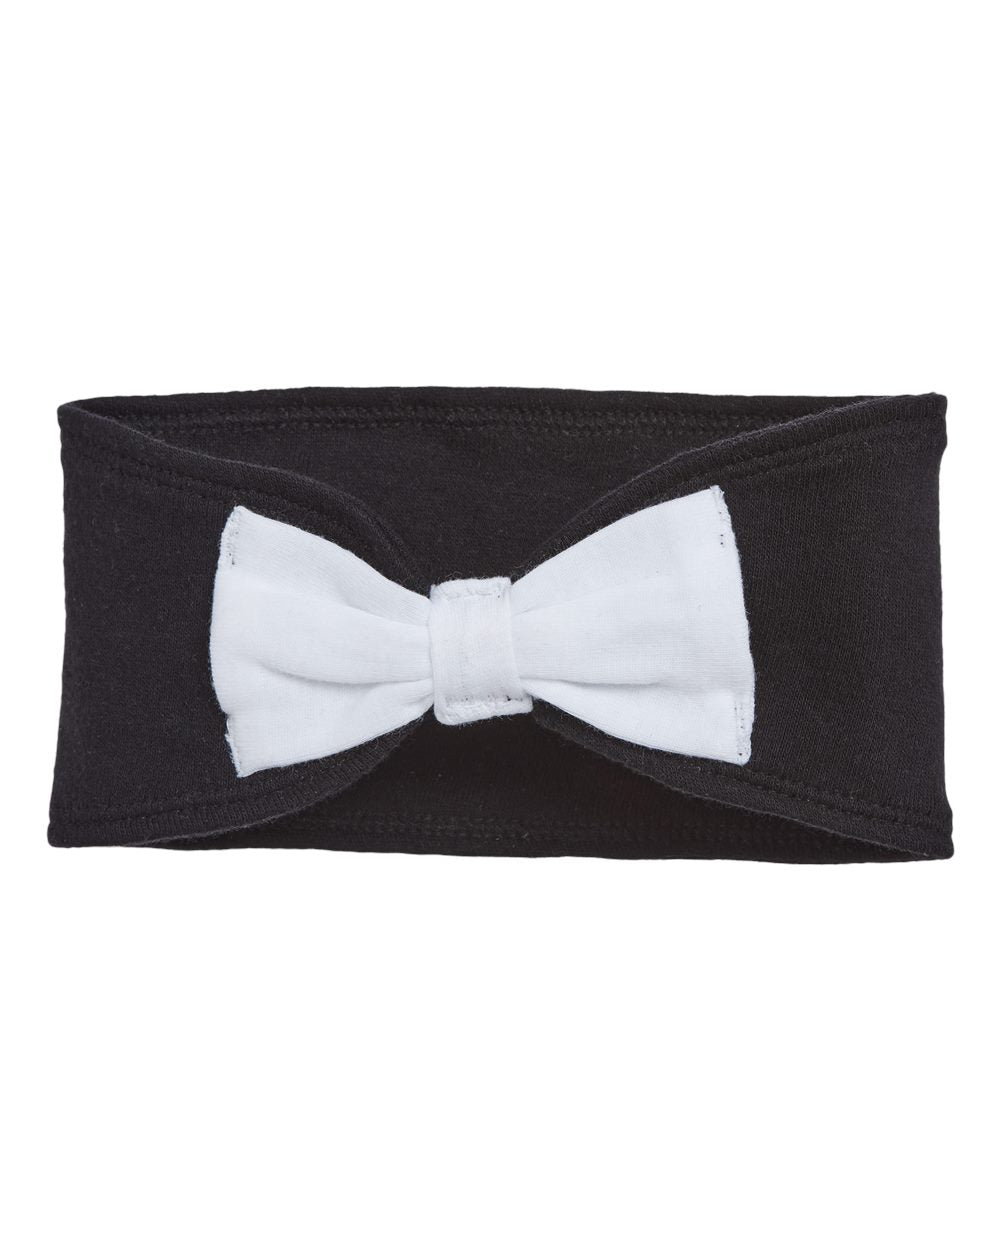 Baby Headband with Bow Tie, (Black-White)